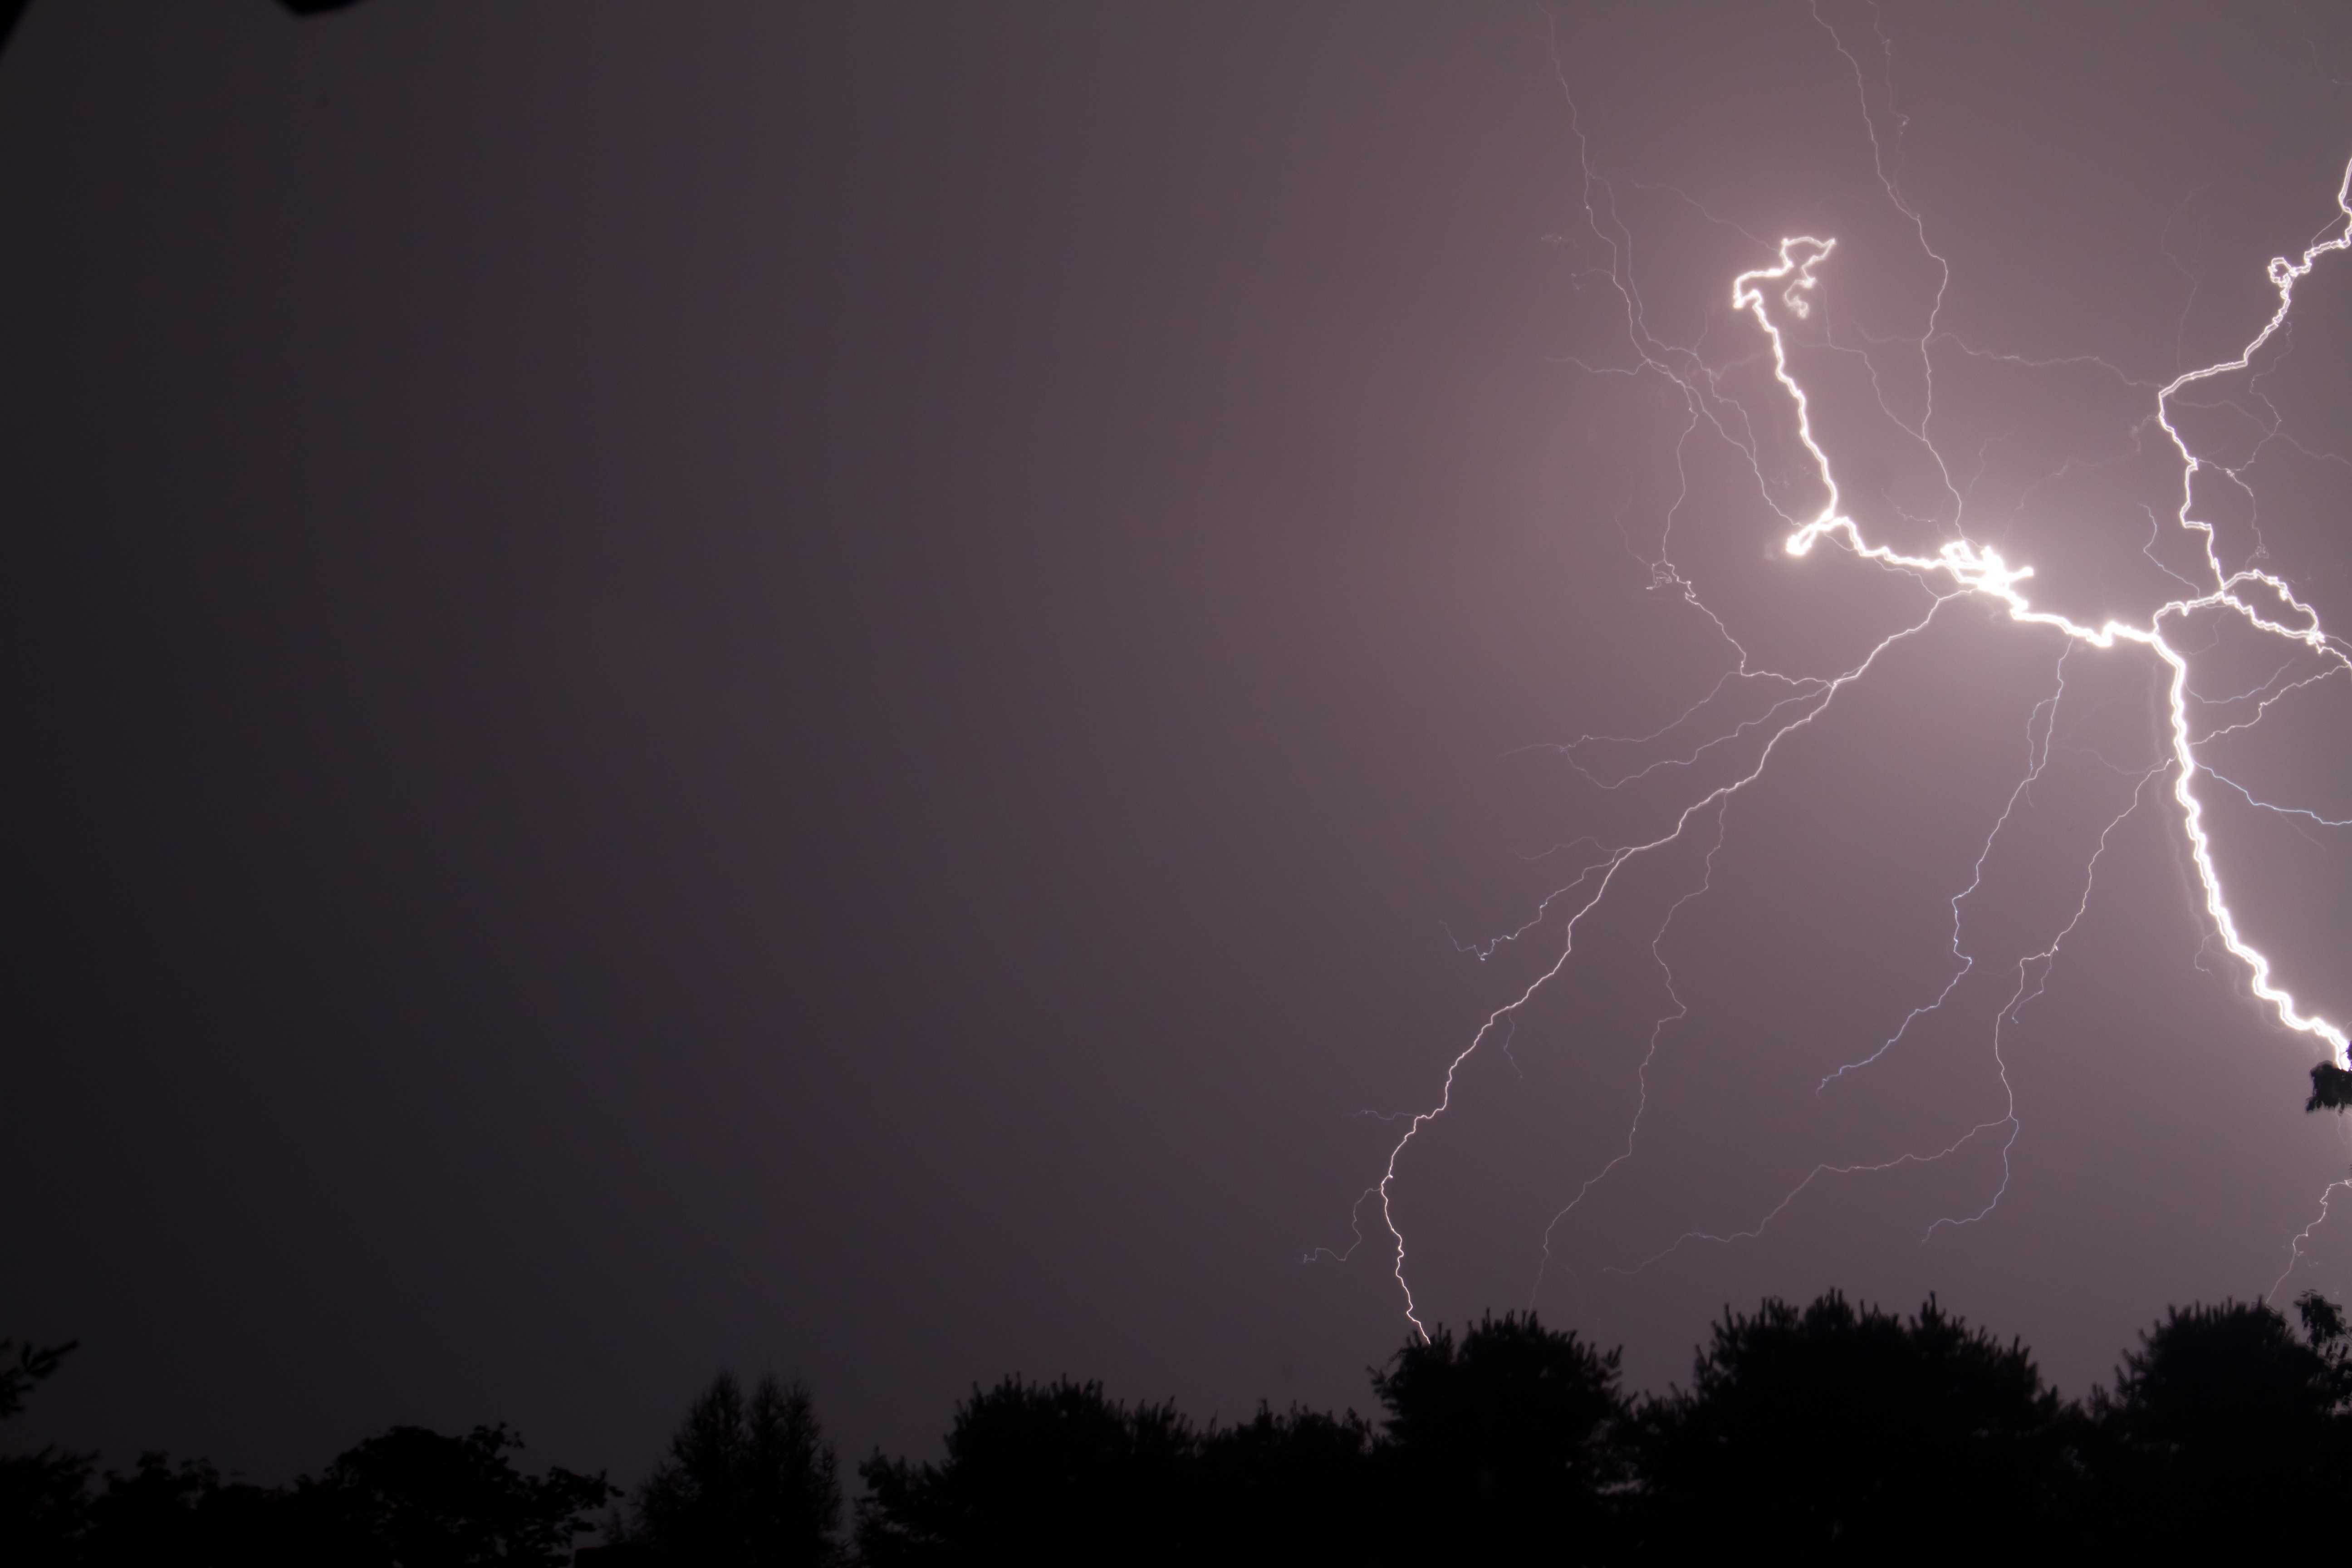 A large lightning bolt strikes in the sky. - Lightning, storm